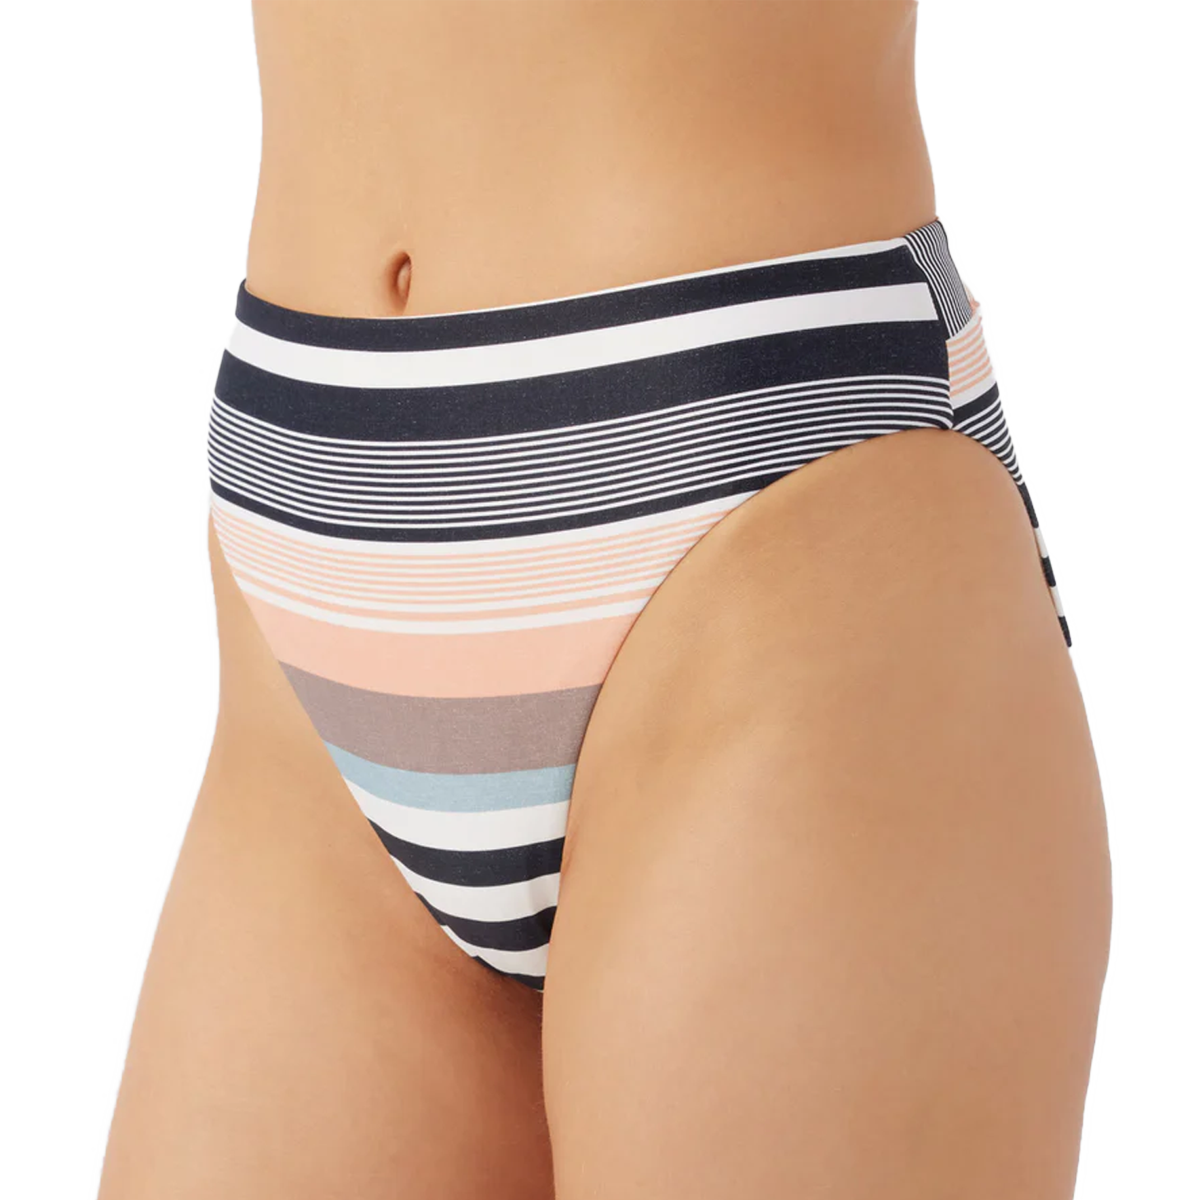 Women's Merhaba Stripe Max Bottom alternate view